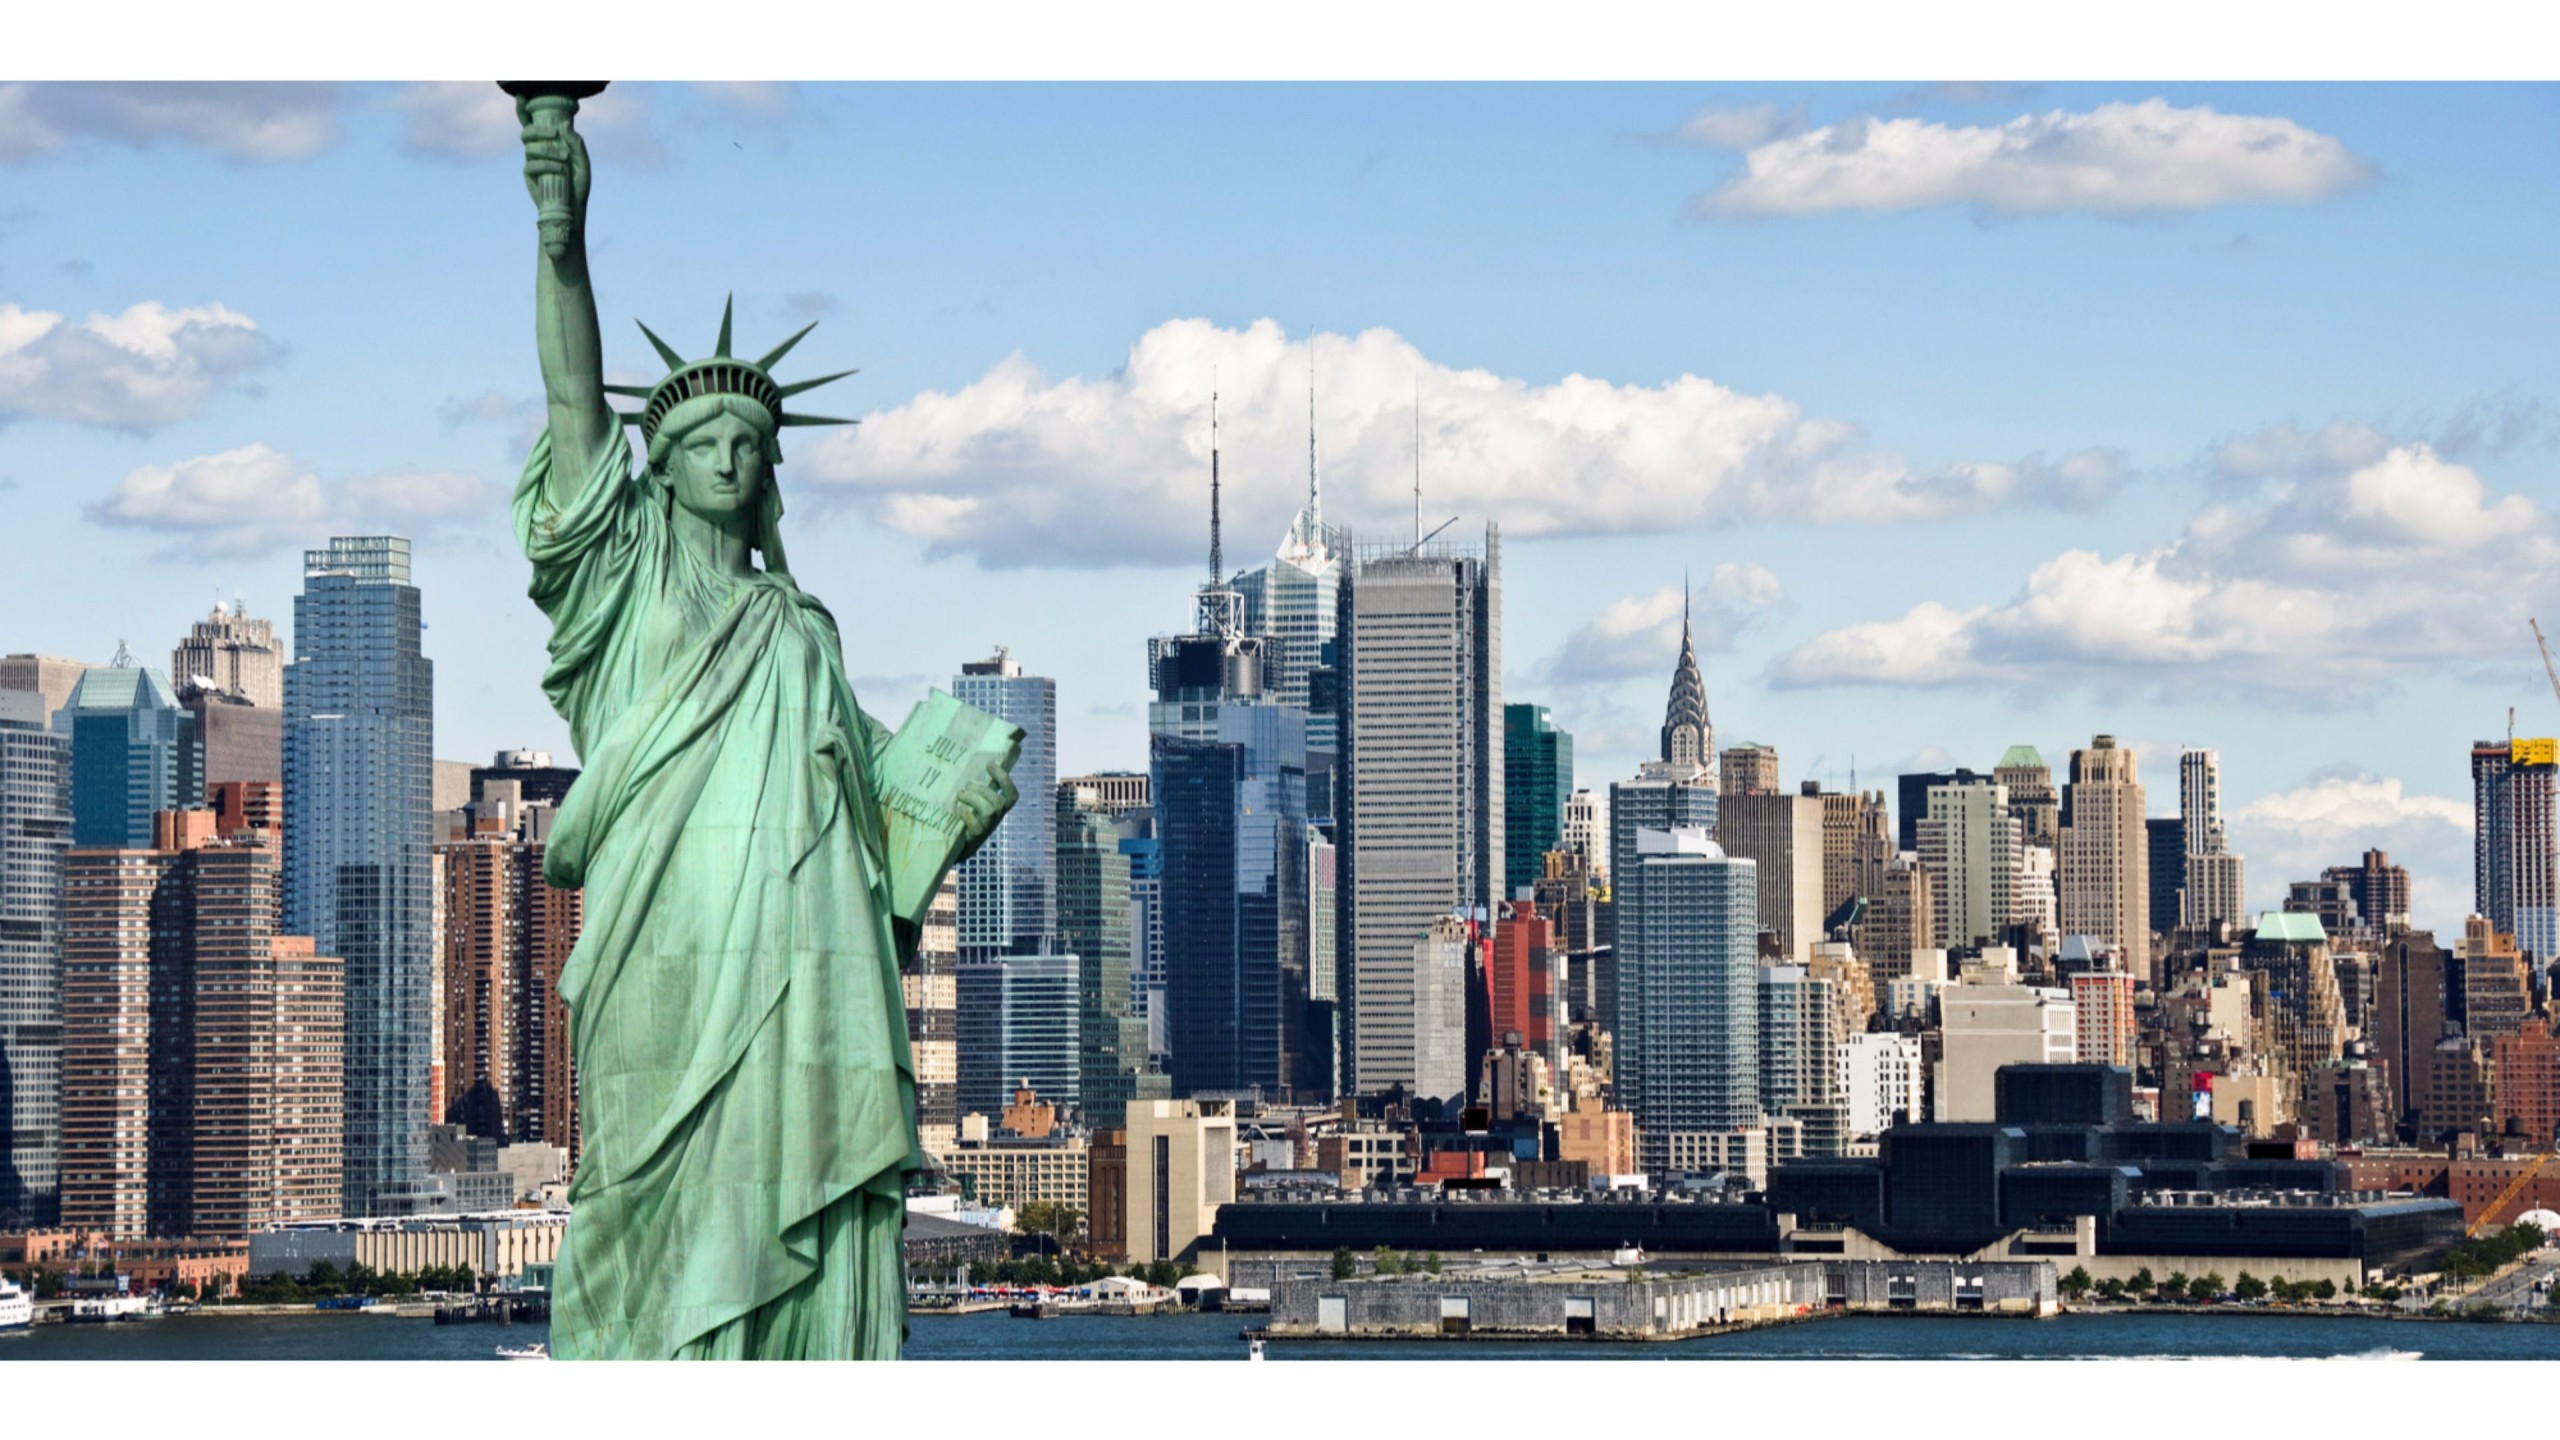 Statue Of Liberty New York City 4k Wallpaper